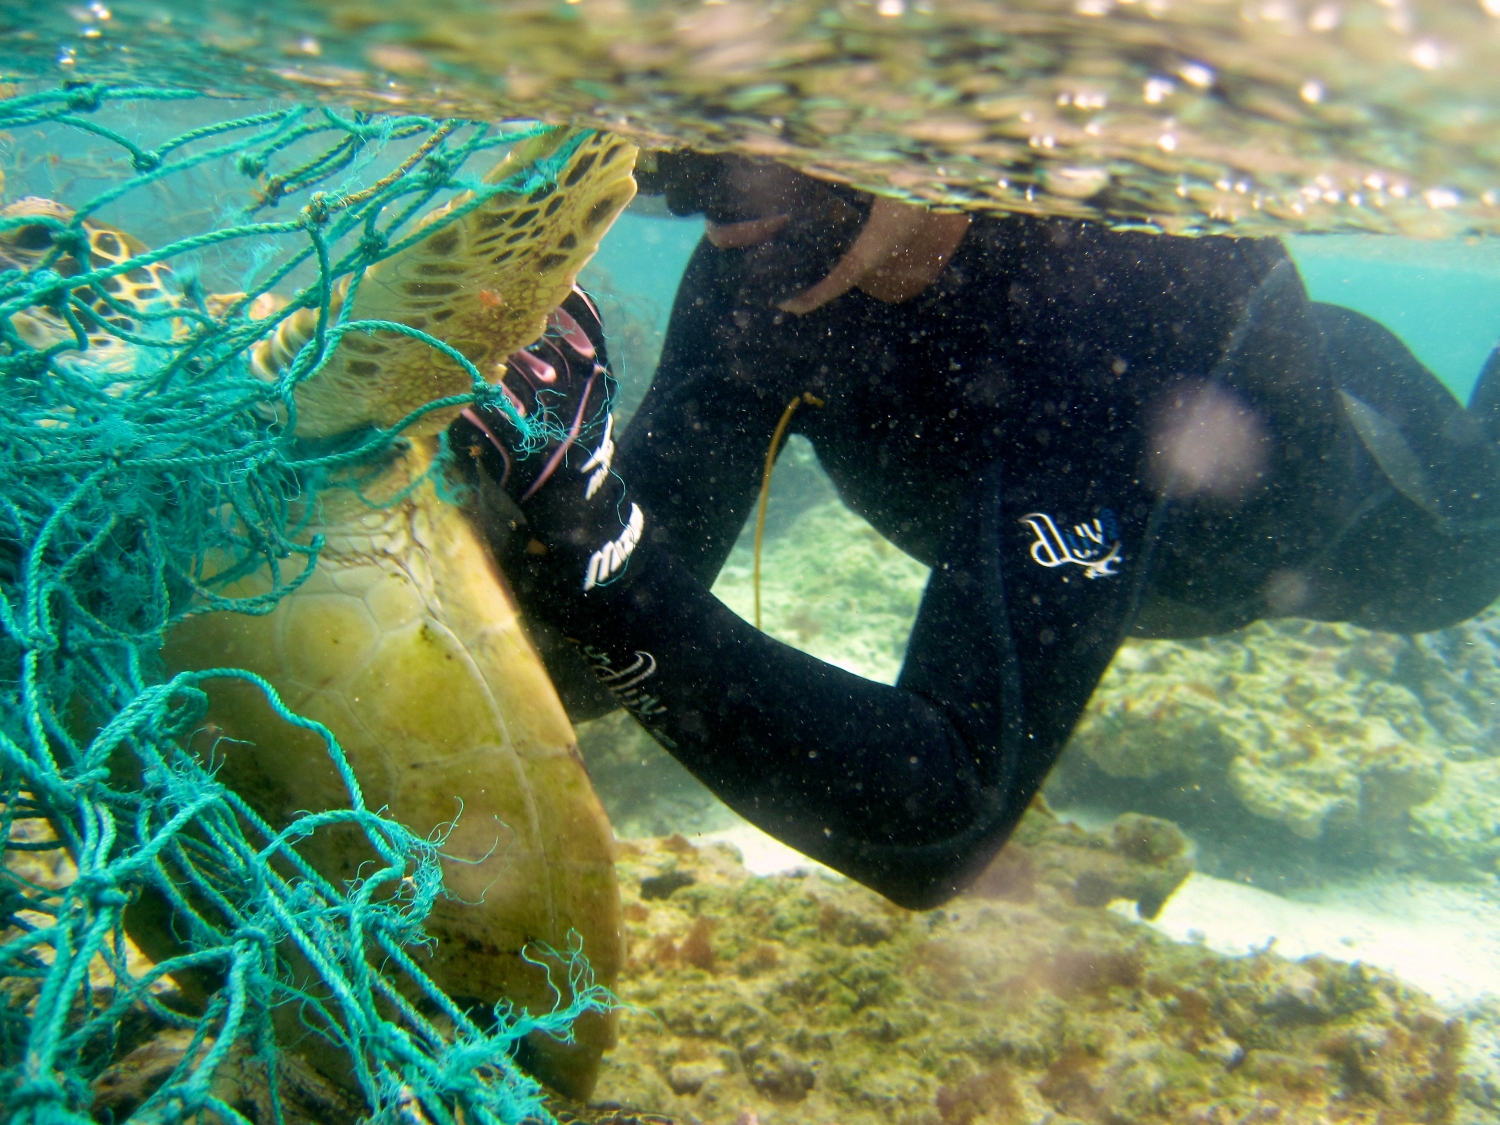 Diver releasing a sea turtle caught in a derelict fishing net. Image: NOAA Marine Debris Program